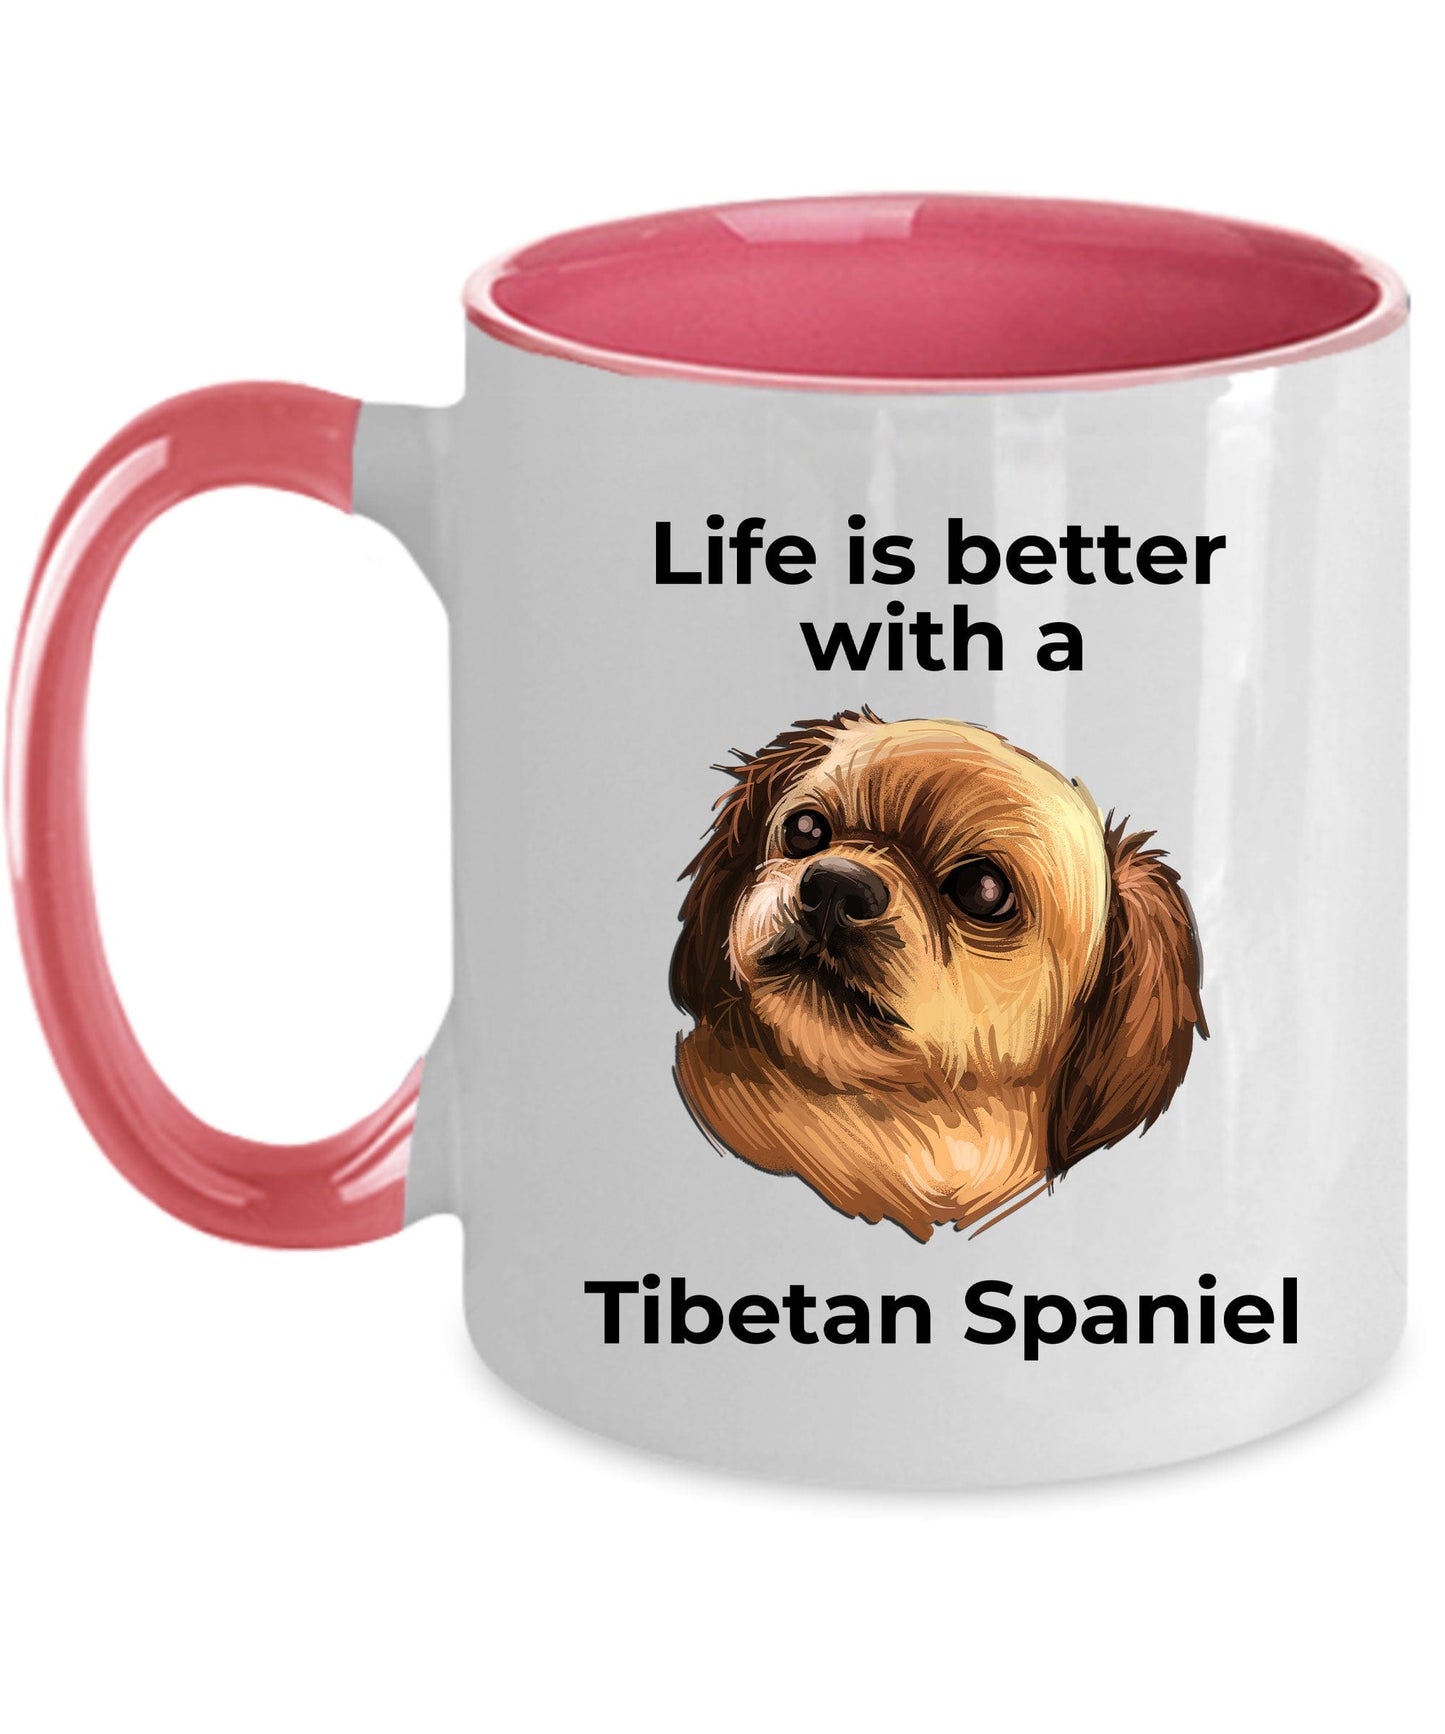 Tibetan Spaniel dog custom coffee mug - Life is Better